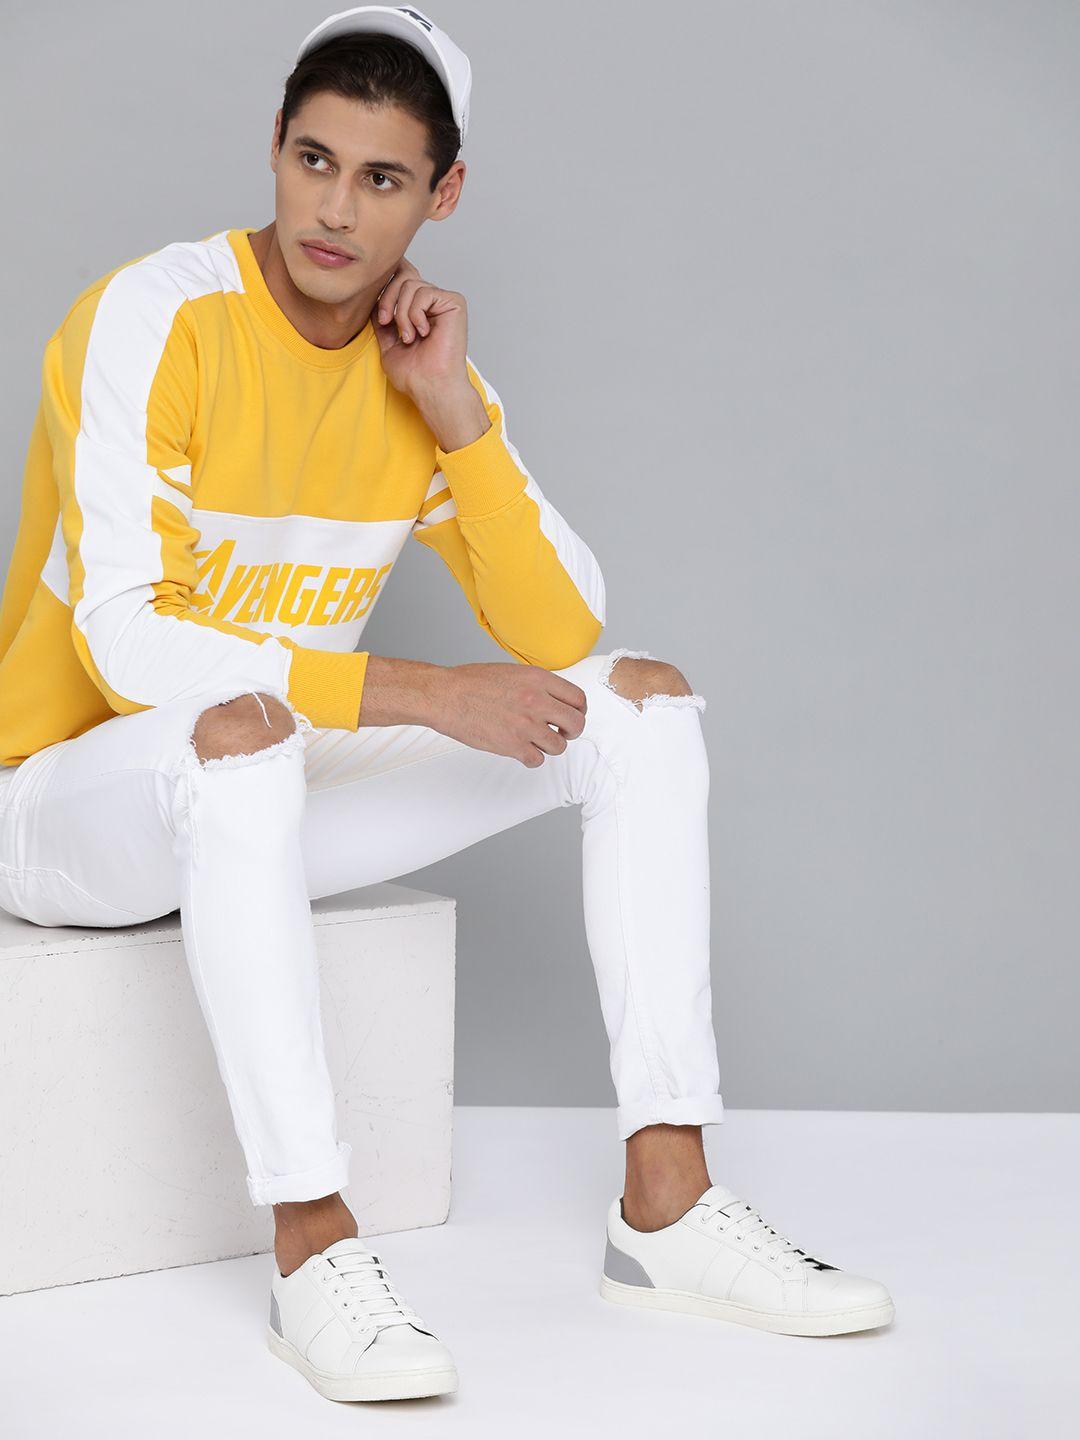 kook n keech marvel men mustard yellow & white printed sweatshirt